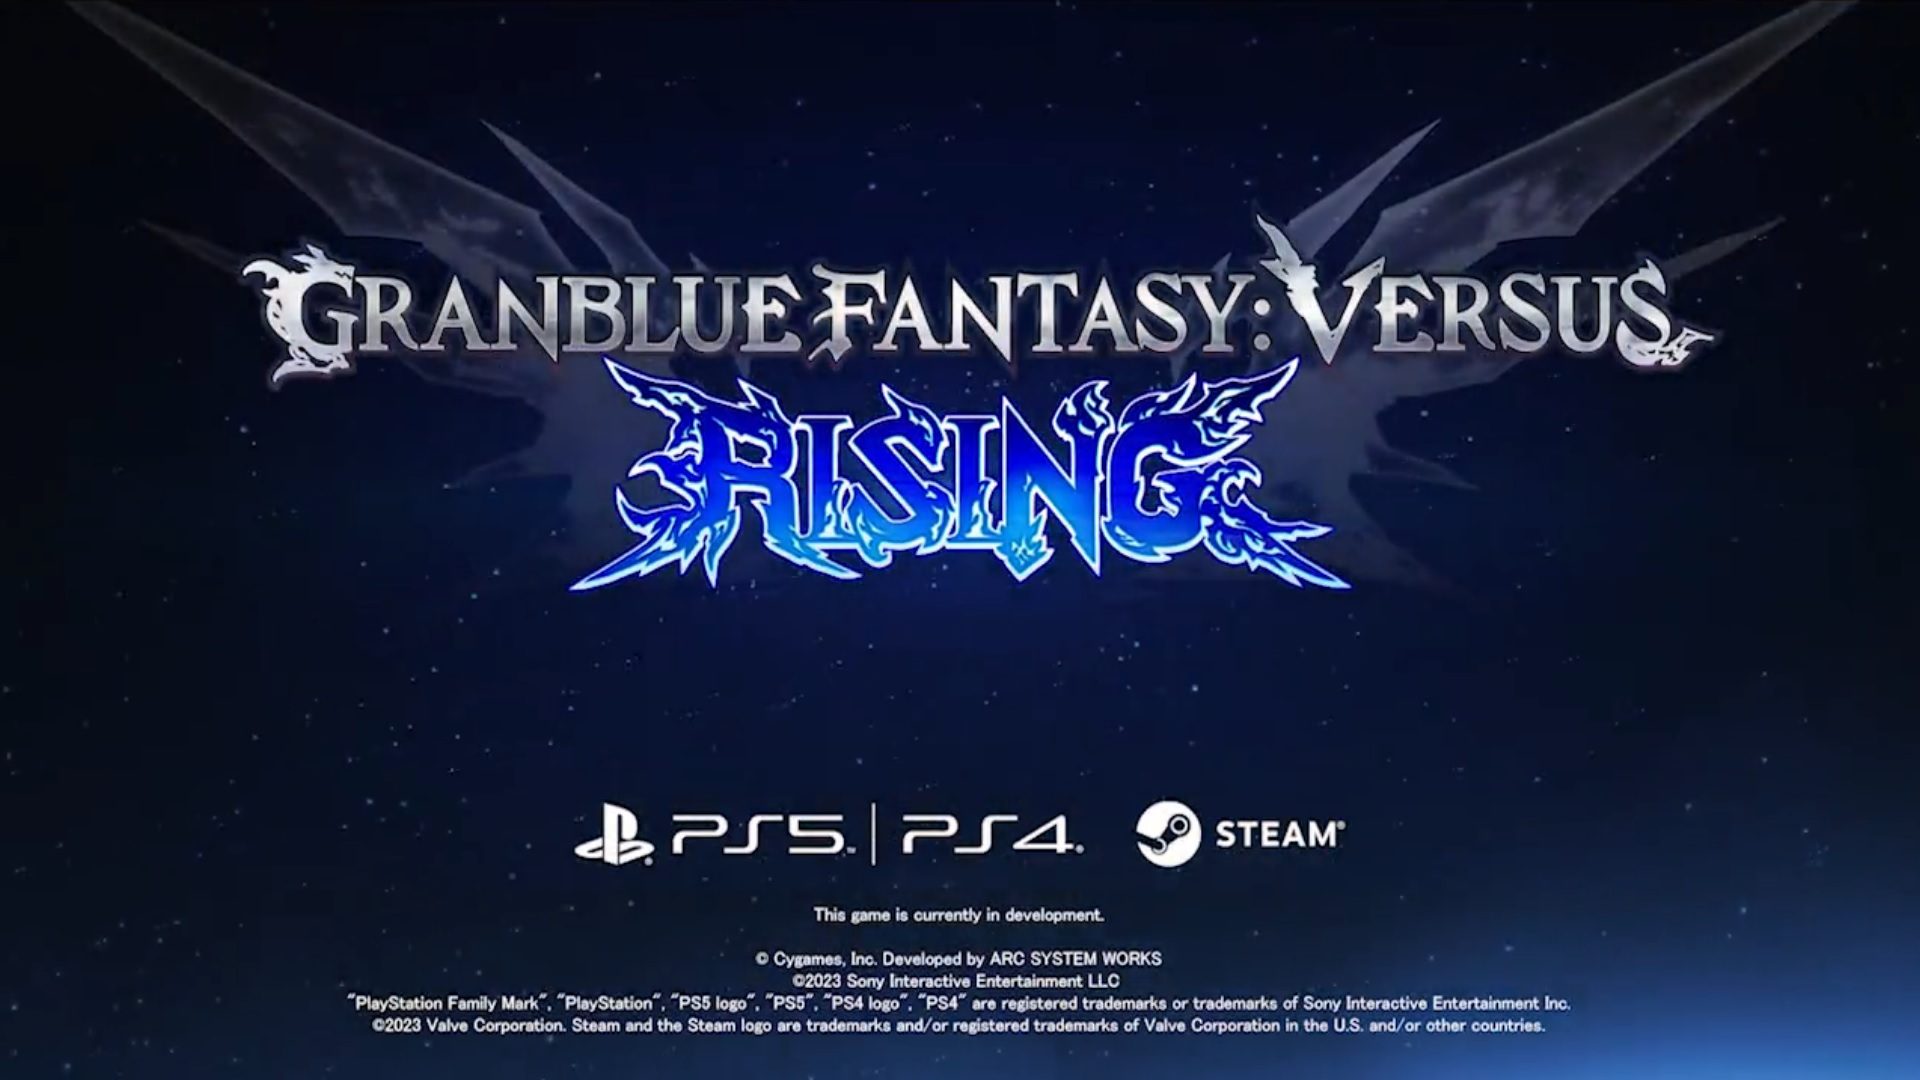 Granblue Fantasy Versus: Rising - Official EVO Japan 2023 Trailer